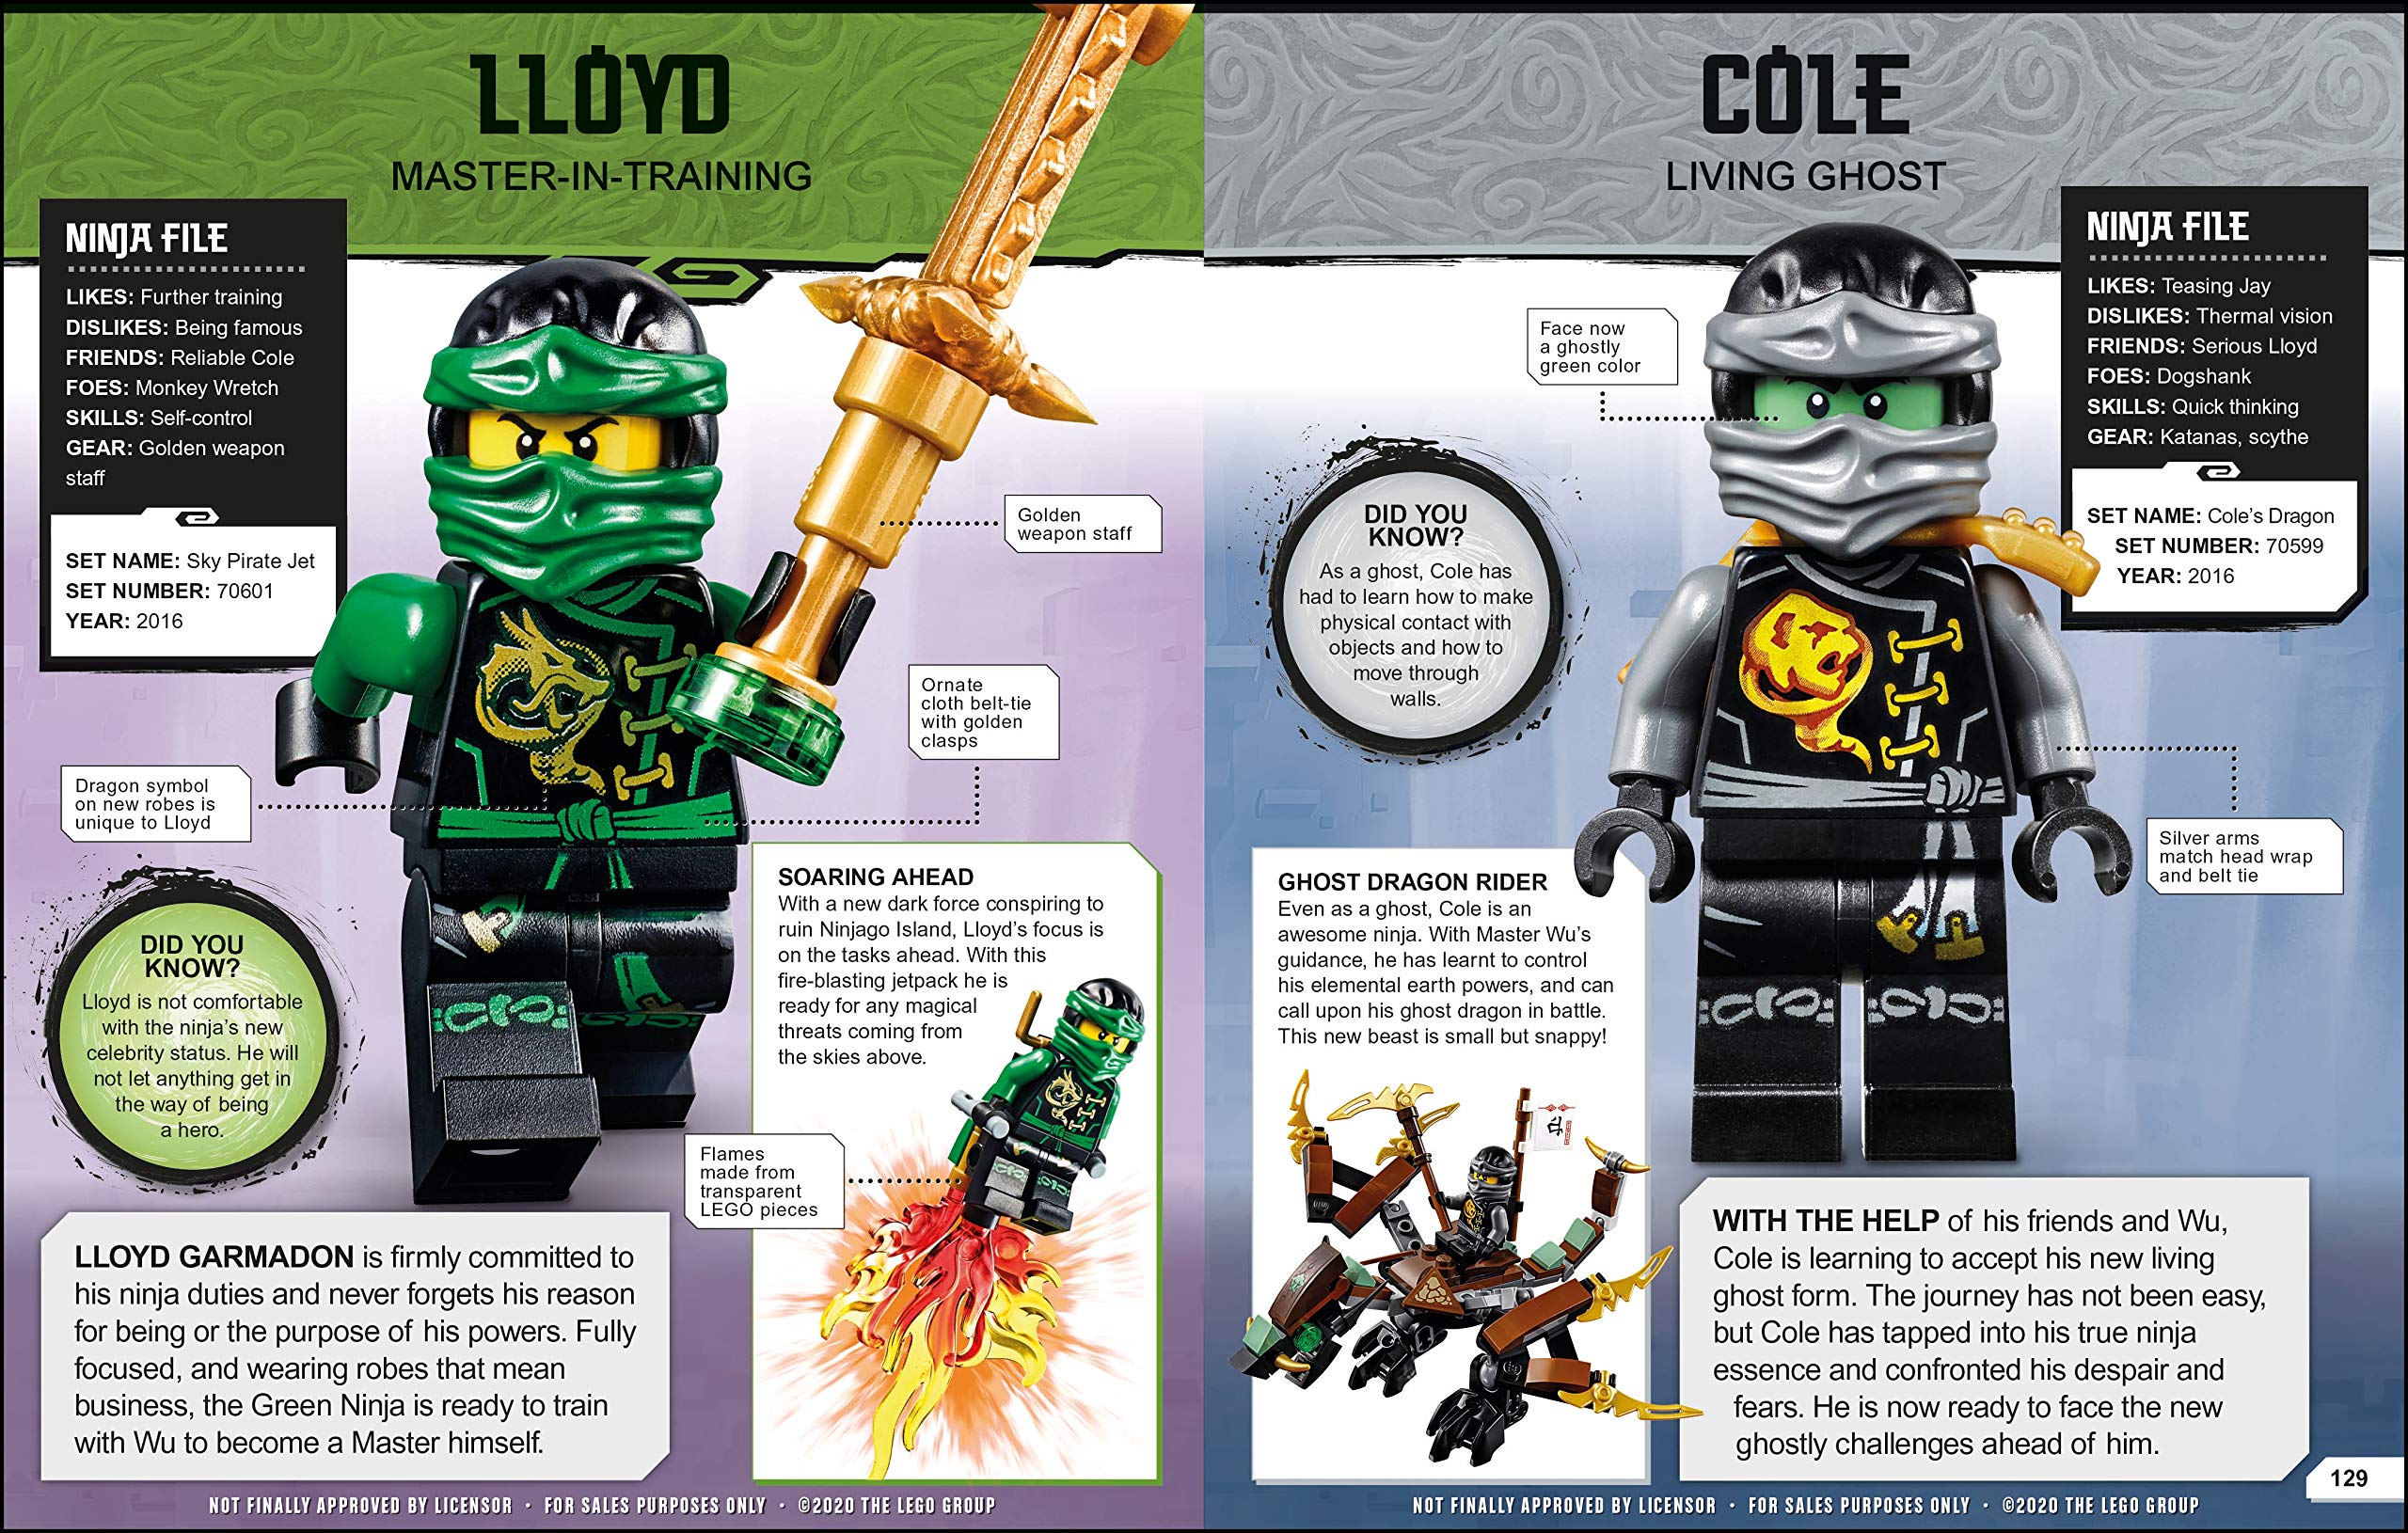 Lego Ninjago Character Encyclopedia With Minifigure Updated Edition